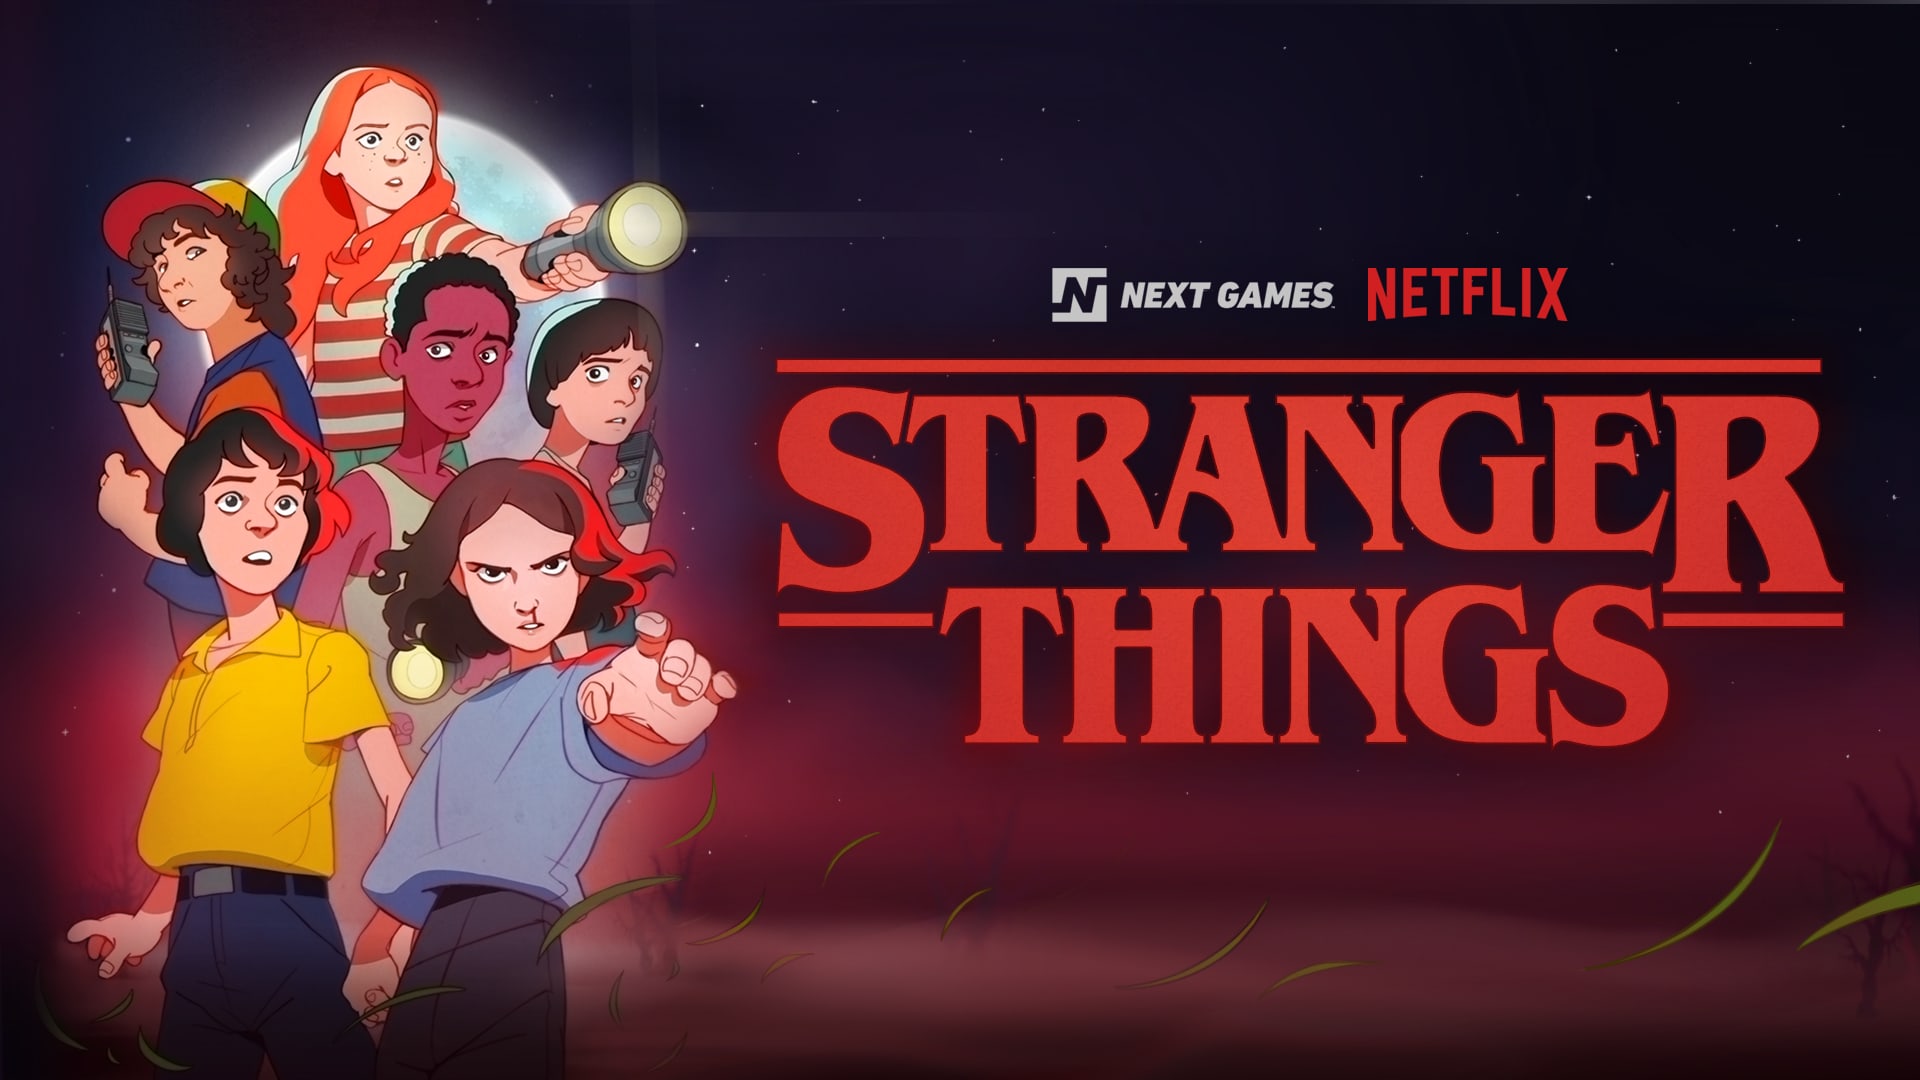 Netflix Stranger Things Mobile Game Planned For 2020